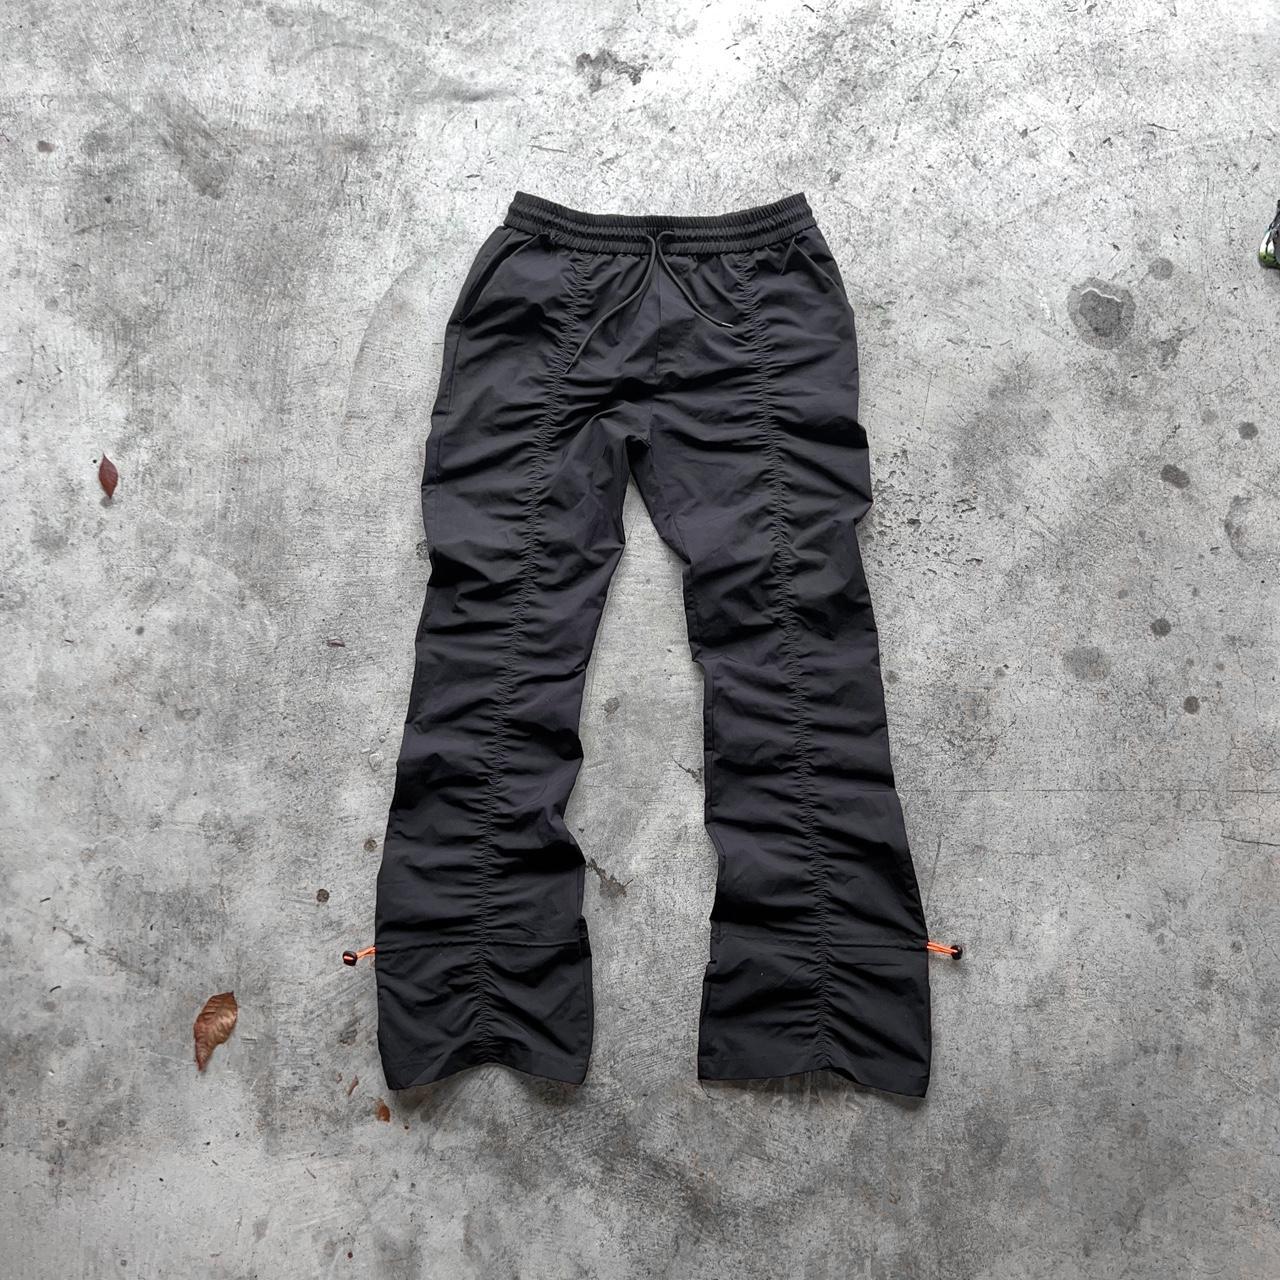 Black Flared Pants Size L (32-34) #flaredpants... - Depop